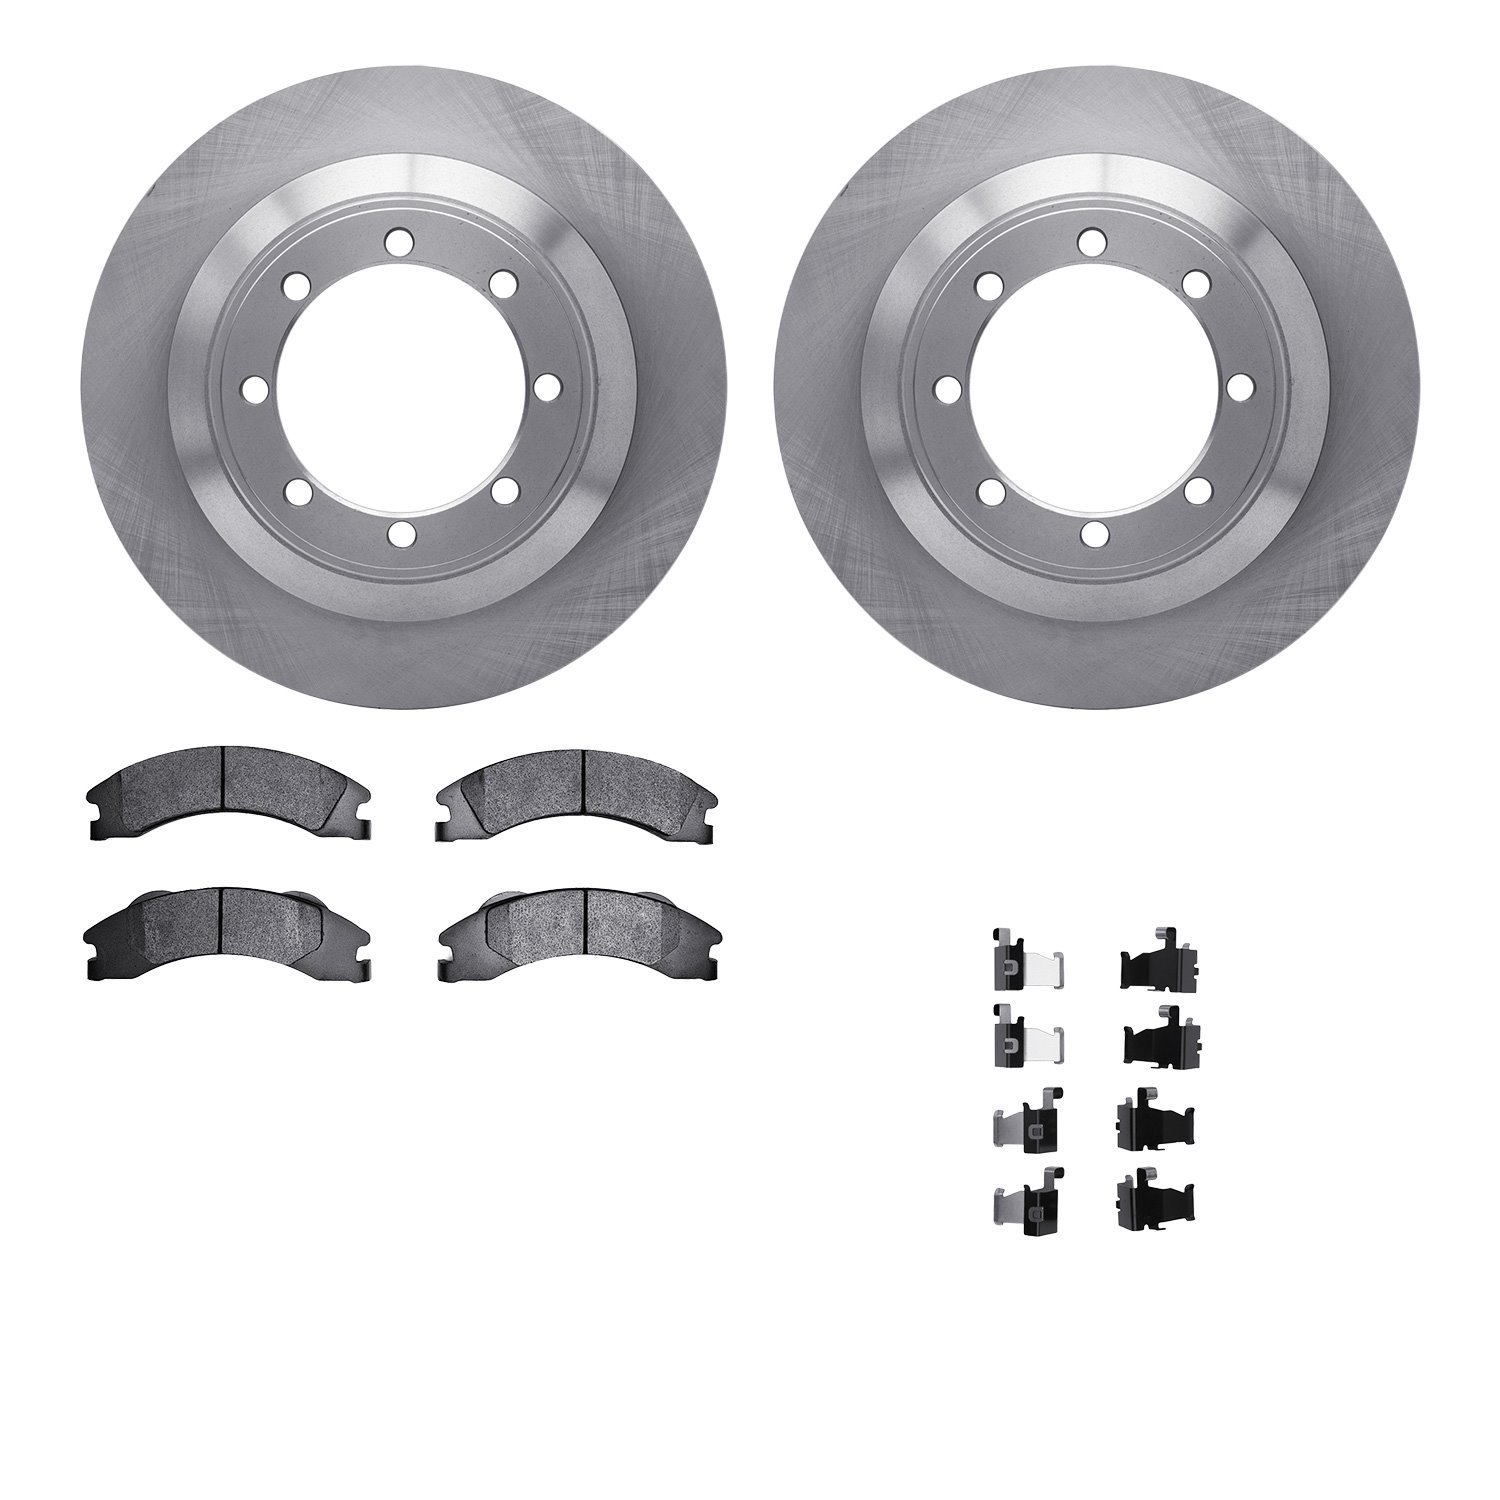 6212-99660 Brake Rotors w/Heavy-Duty Brake Pads Kit & Hardware, Fits Select Ford/Lincoln/Mercury/Mazda, Position: Rear